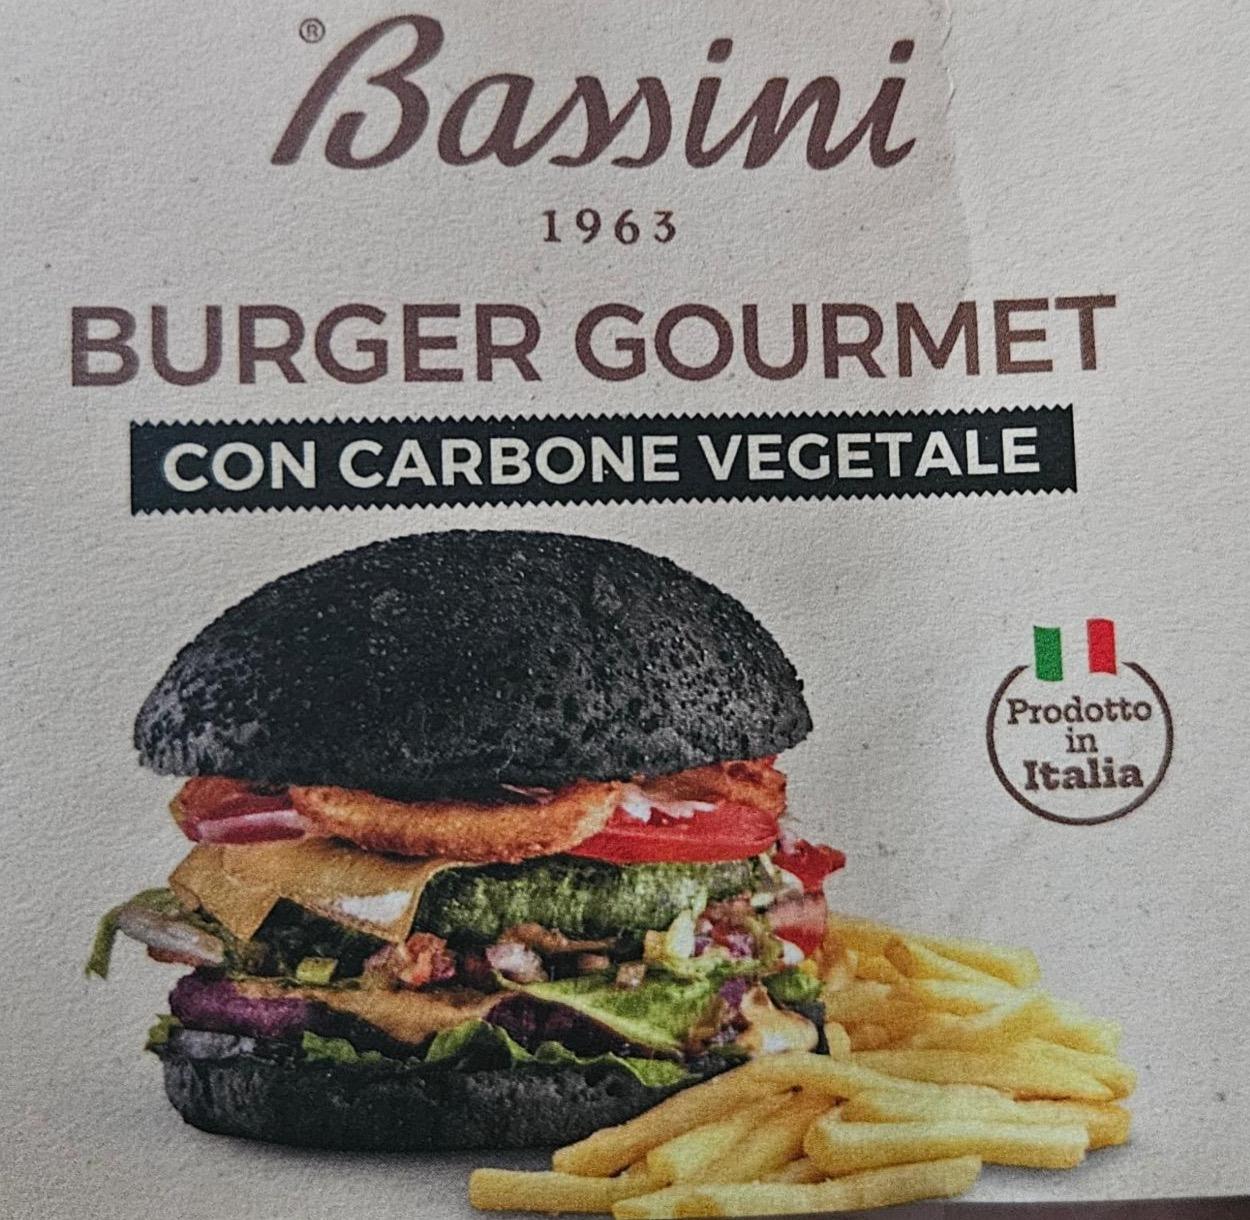 Фото - Burger gourmet con carbone vegetale Bassini